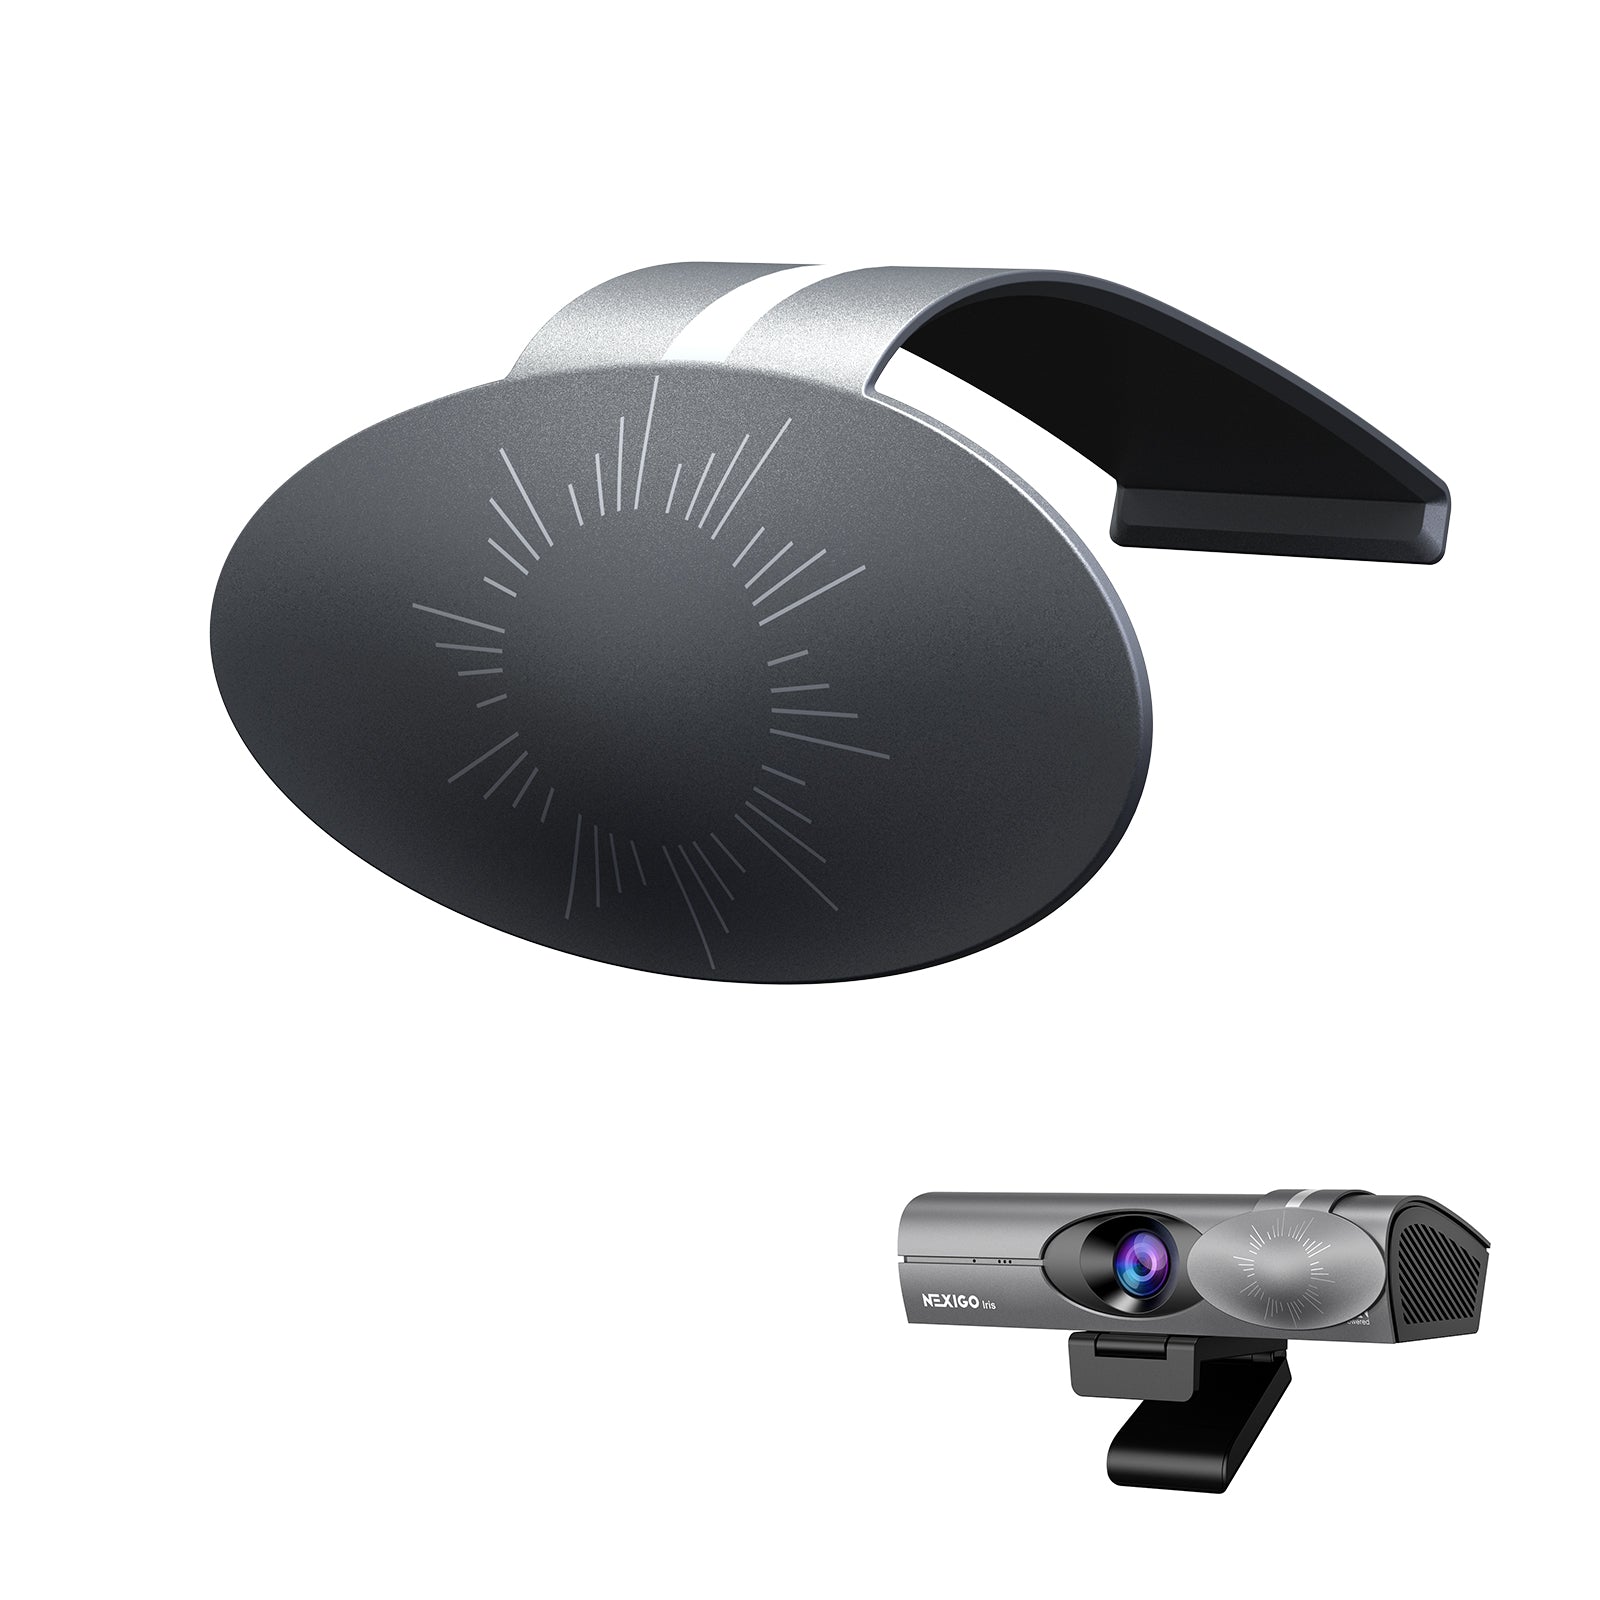 NexiGo Replacement Cover for Webcams consumerelectronics - NexiGo